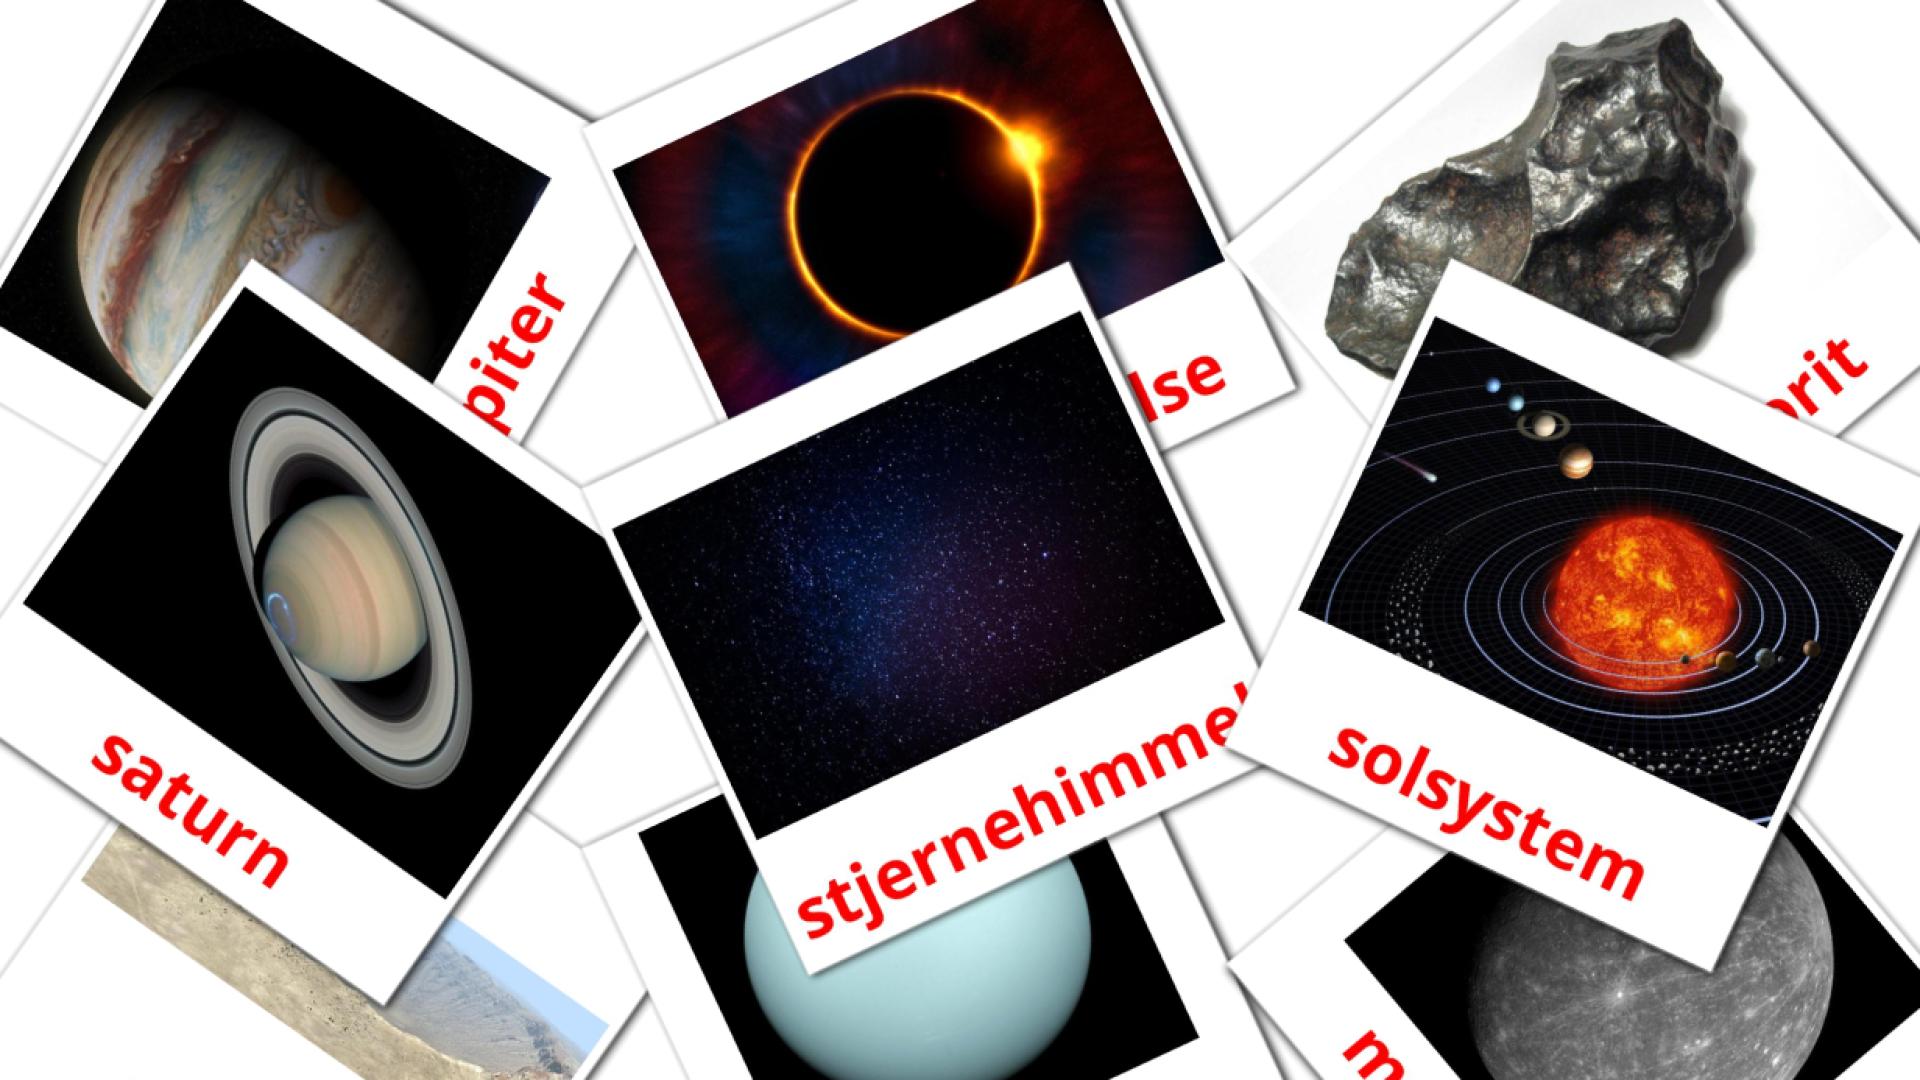 21 Solsystem flashcards